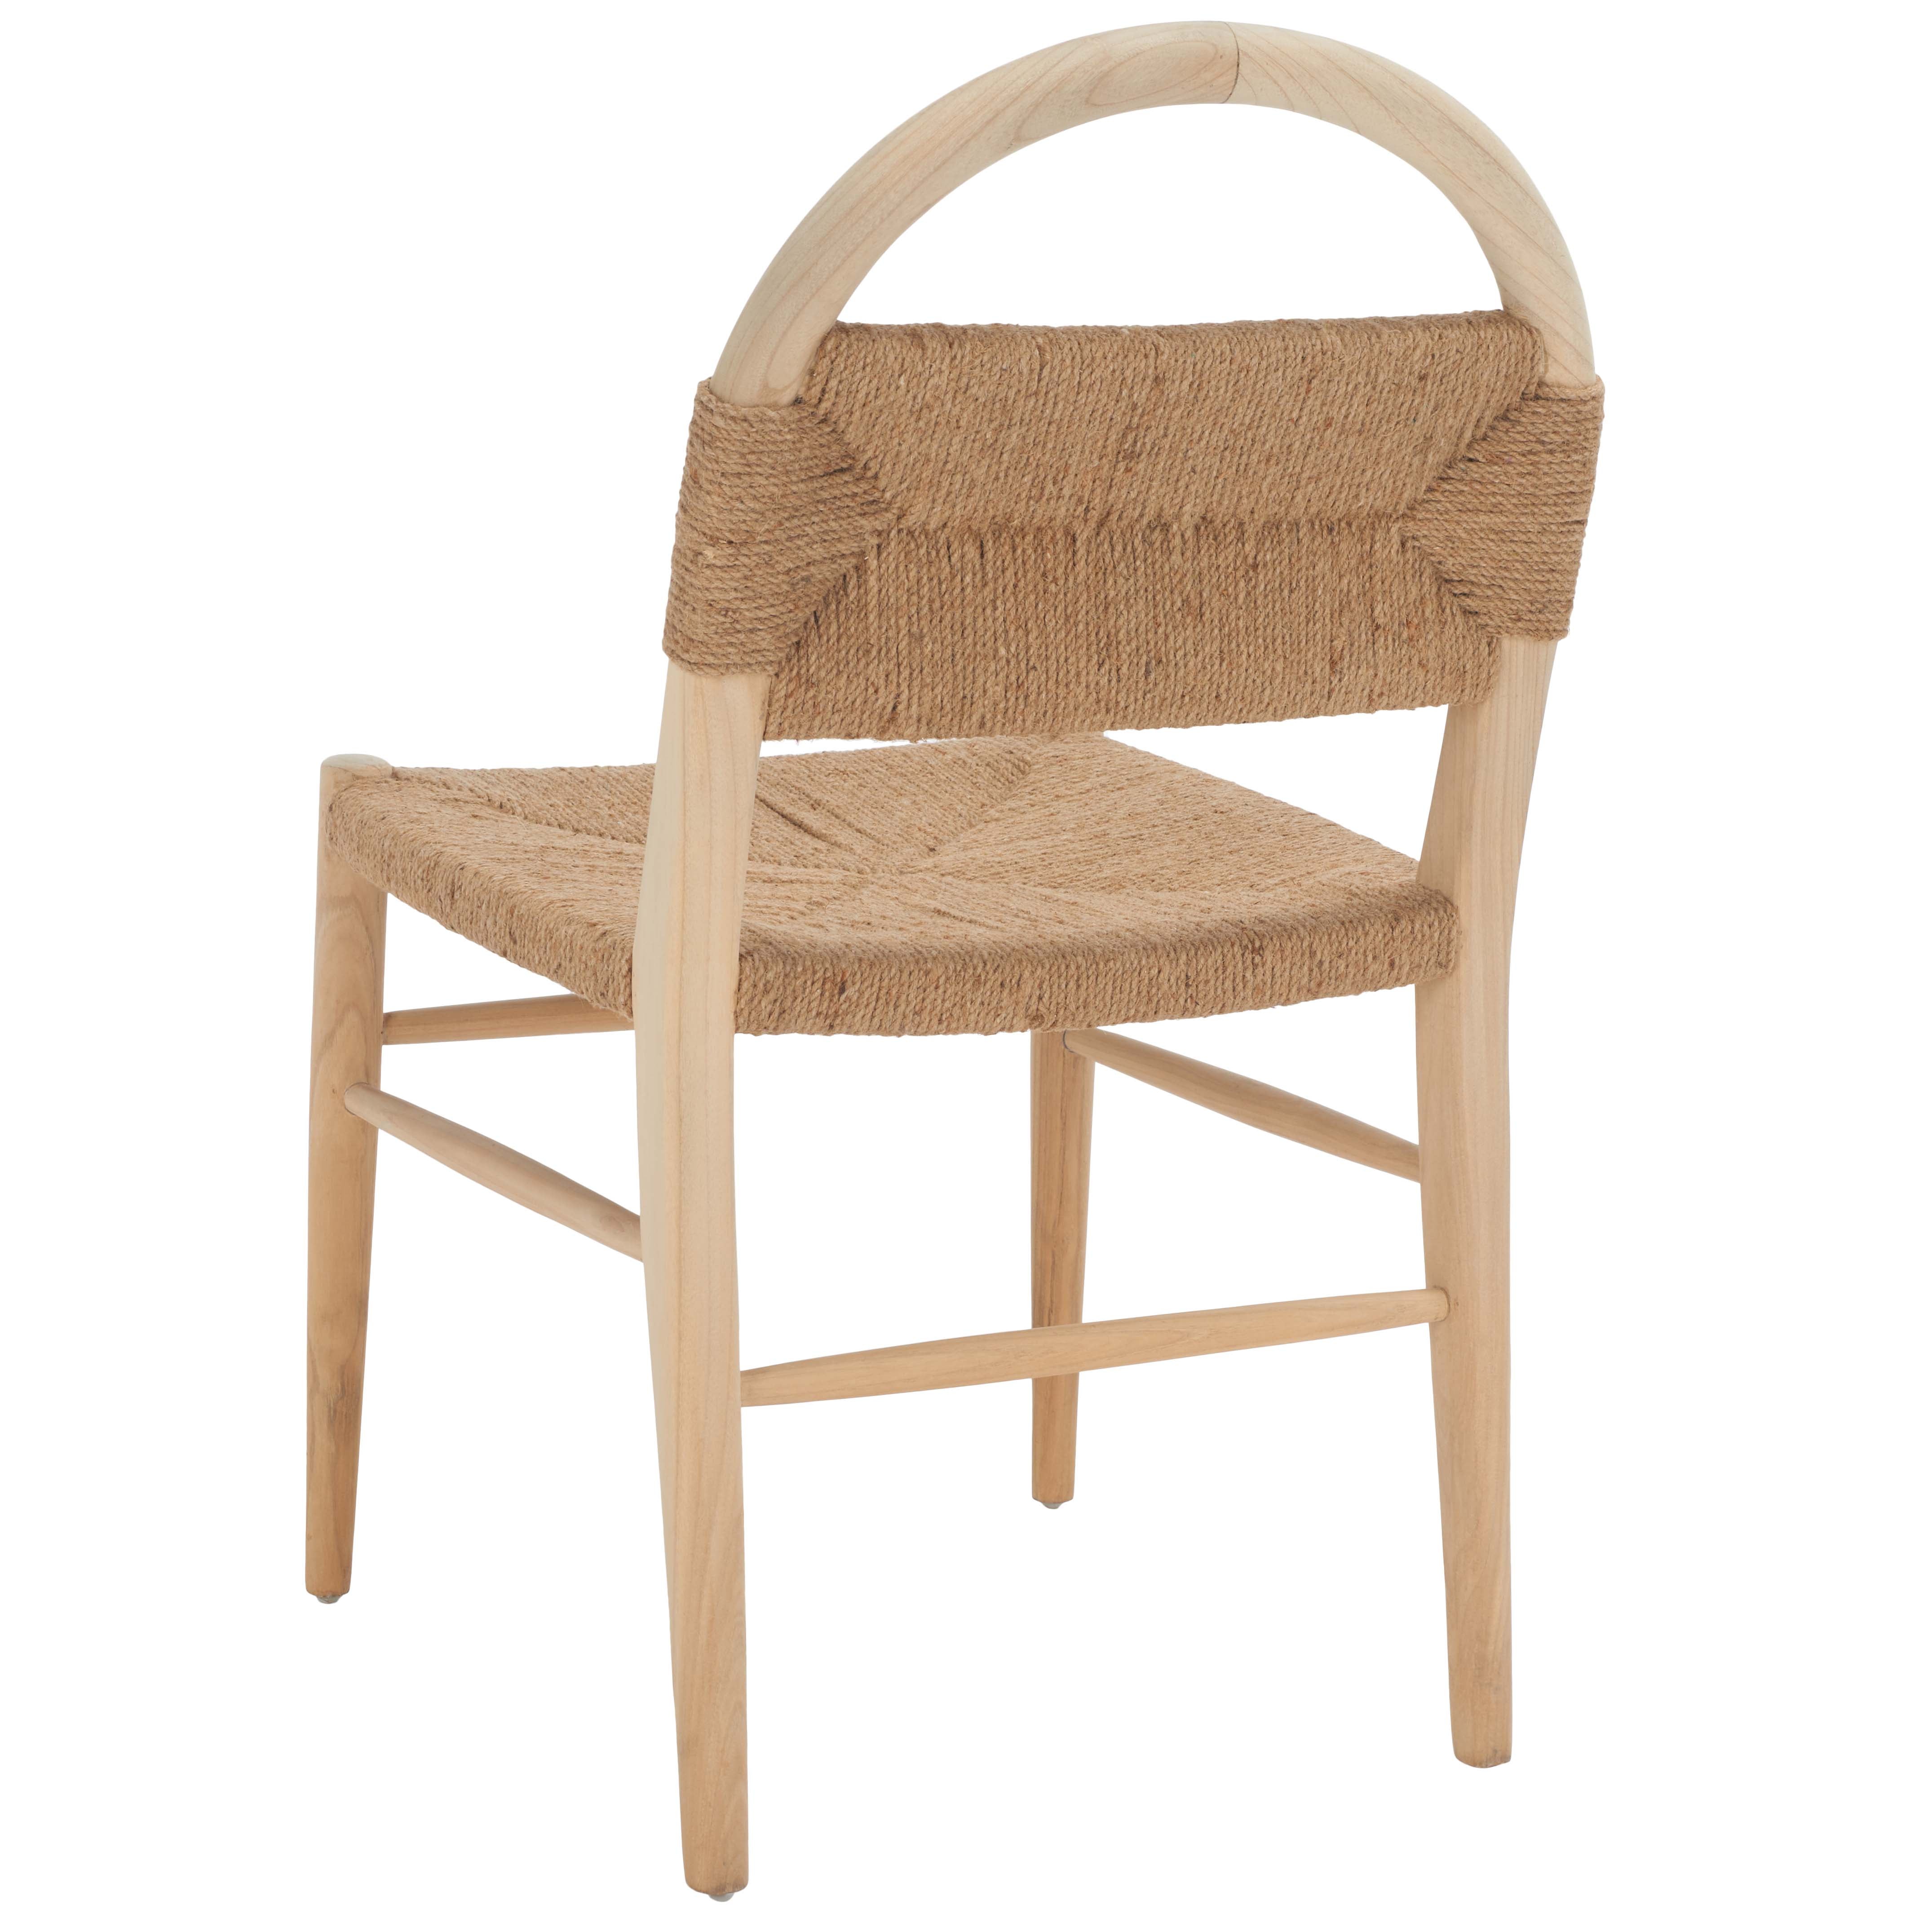 Safavieh Ottilie Dining Chair , DCH1206 - Natural Sungkai / Natural Jute Rope